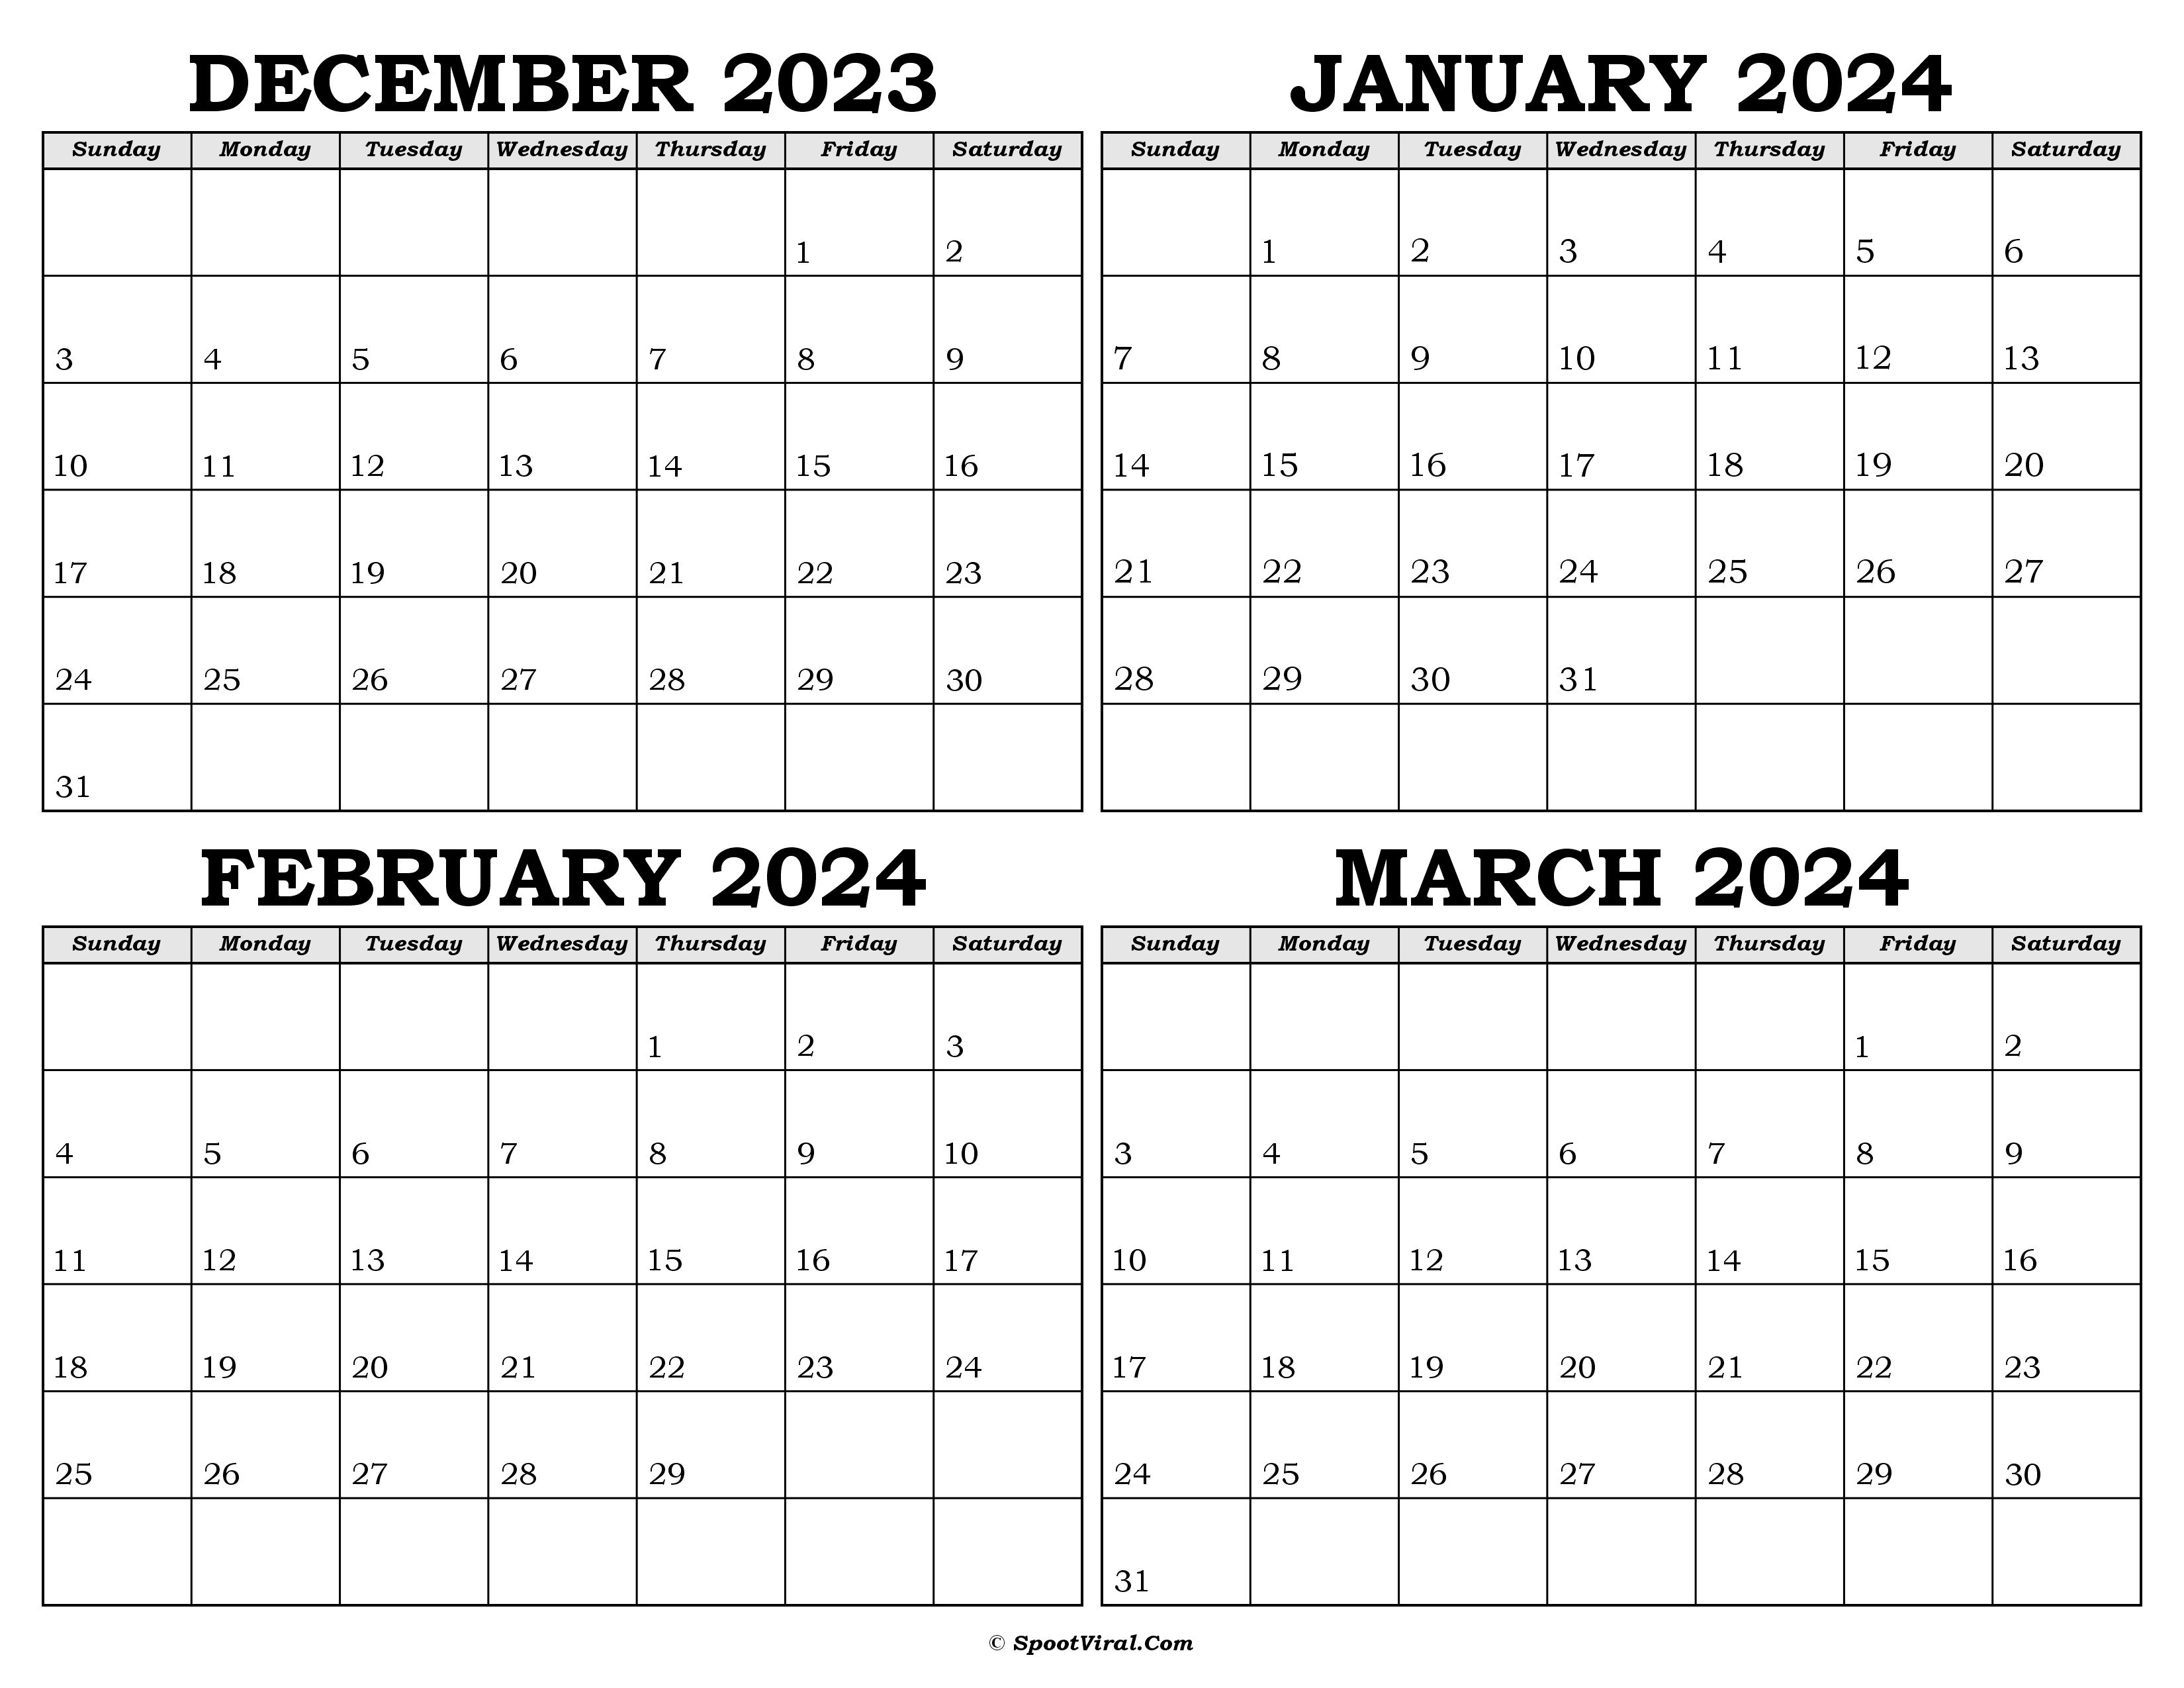 Calendar December 2023 to March 2024